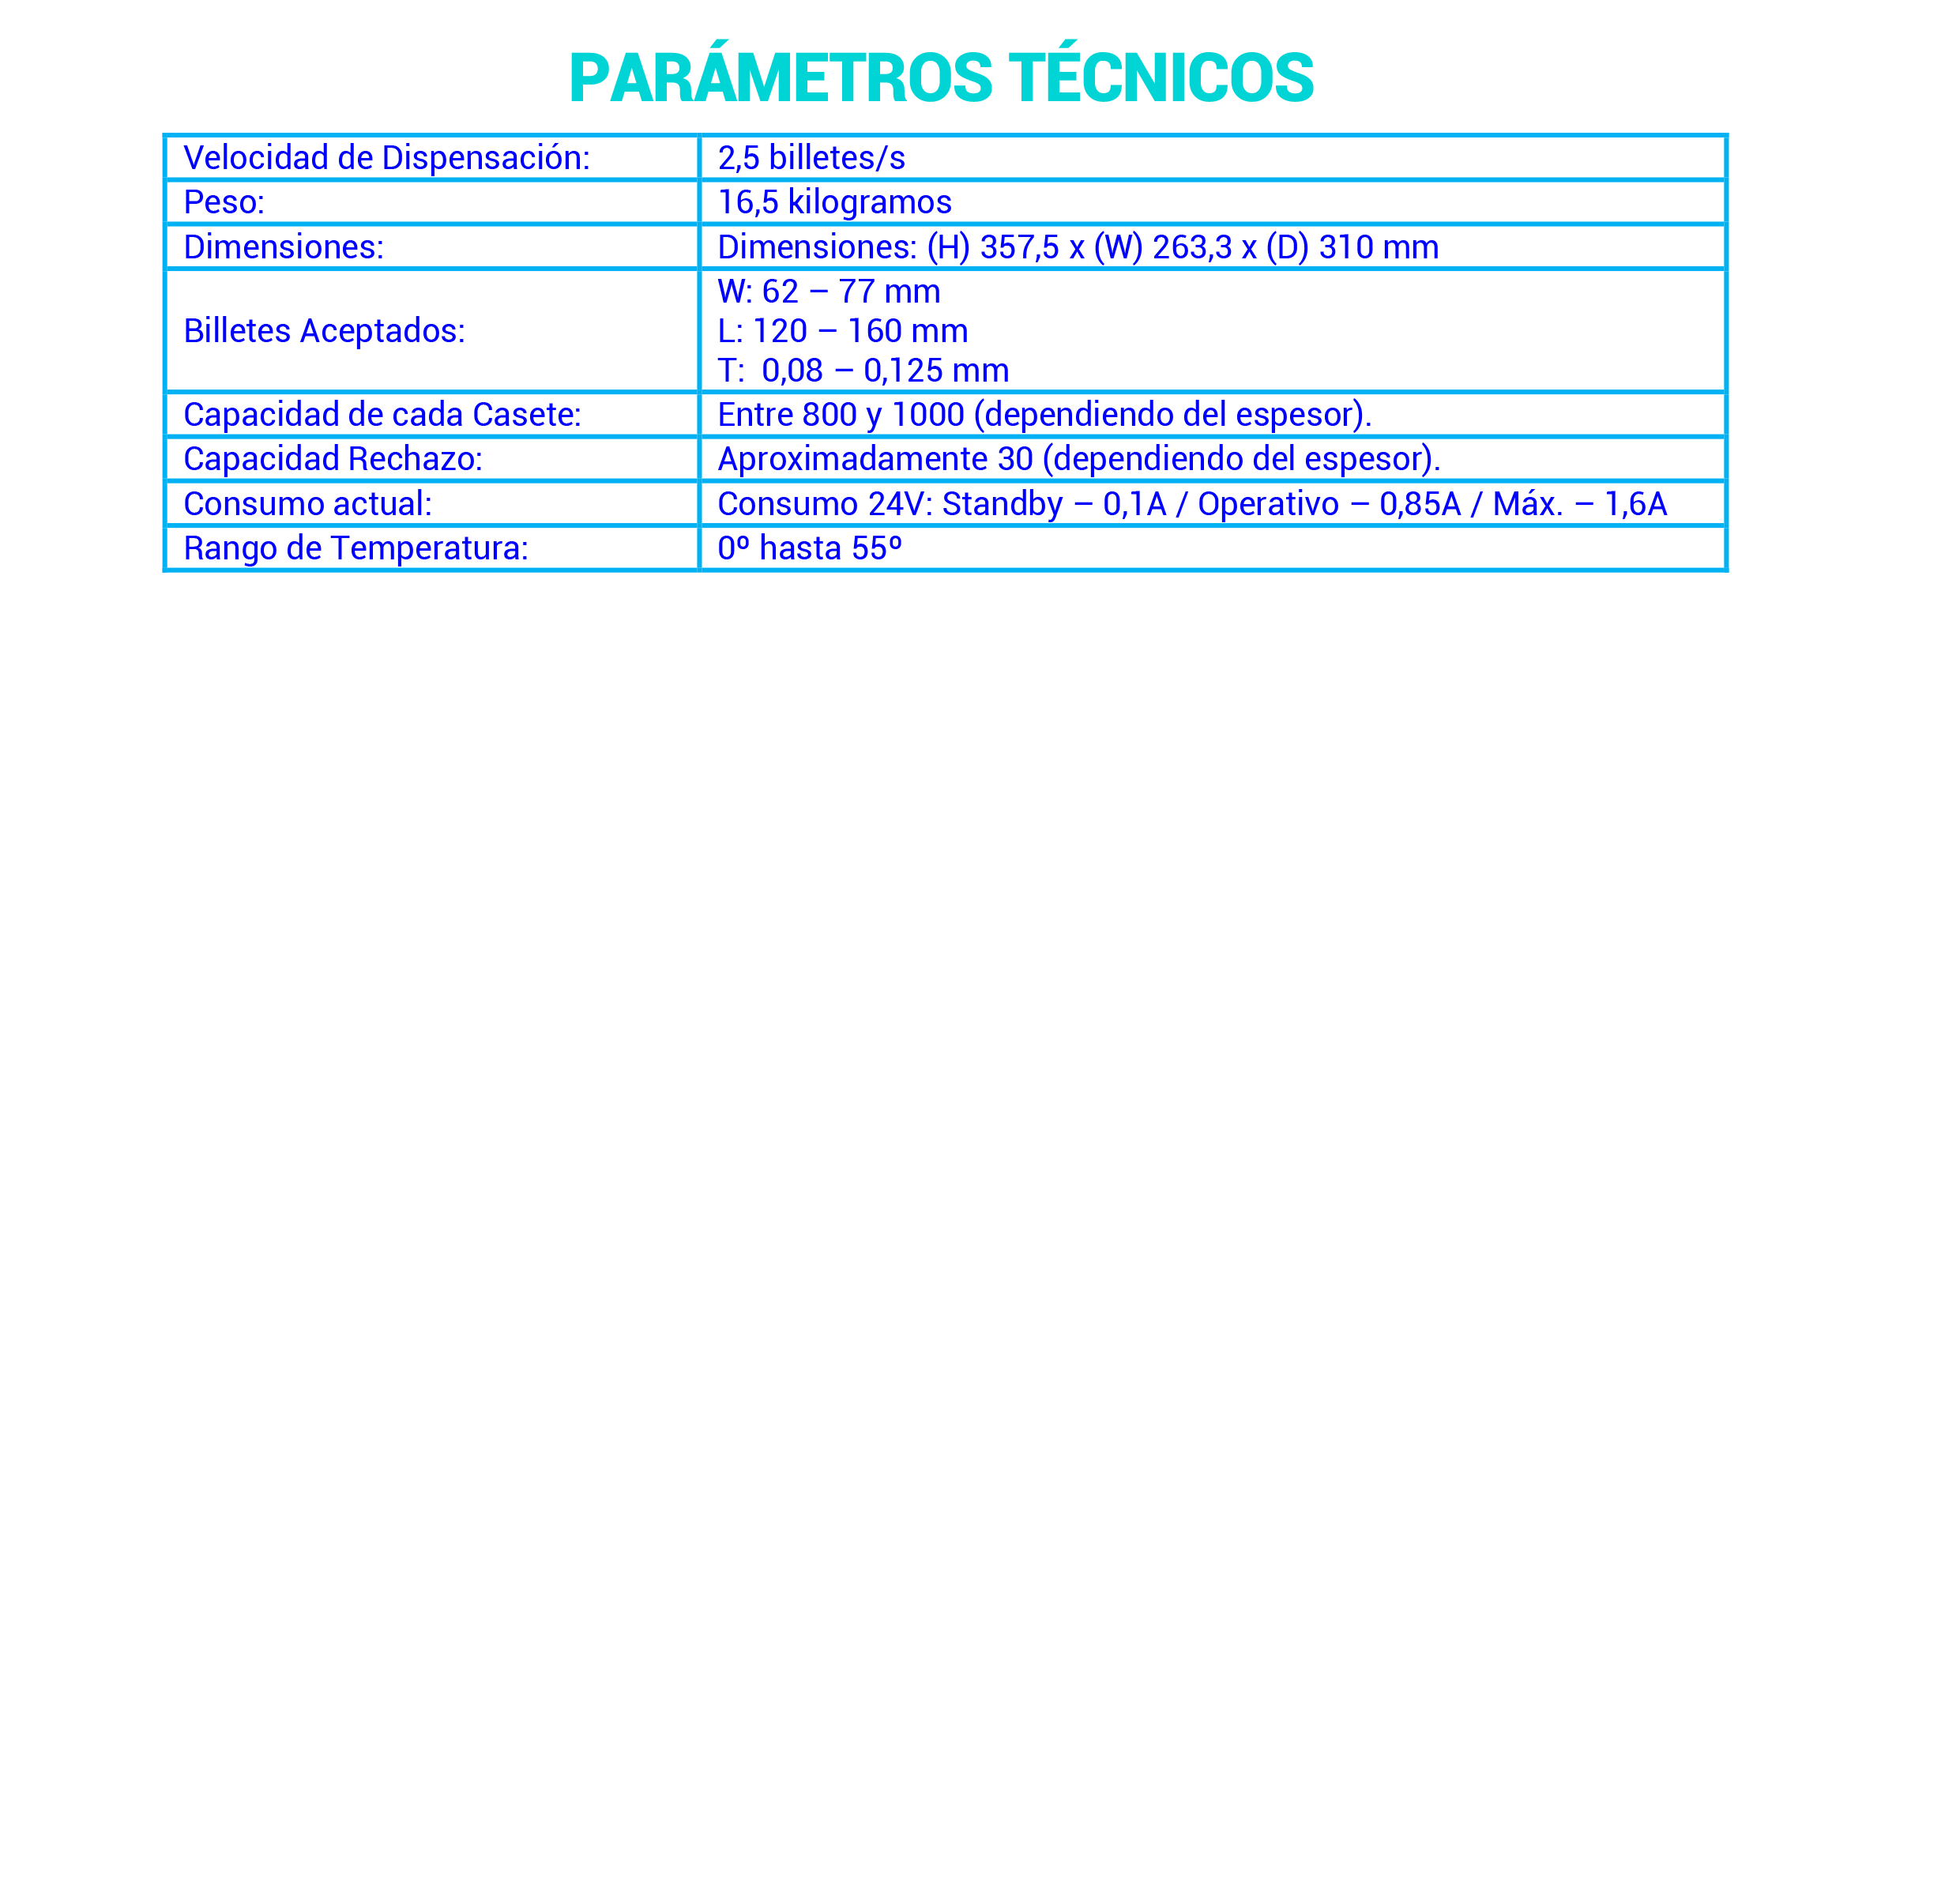 Dispensador Billetes NDR2000 de ICT: Parámetros Técnicos